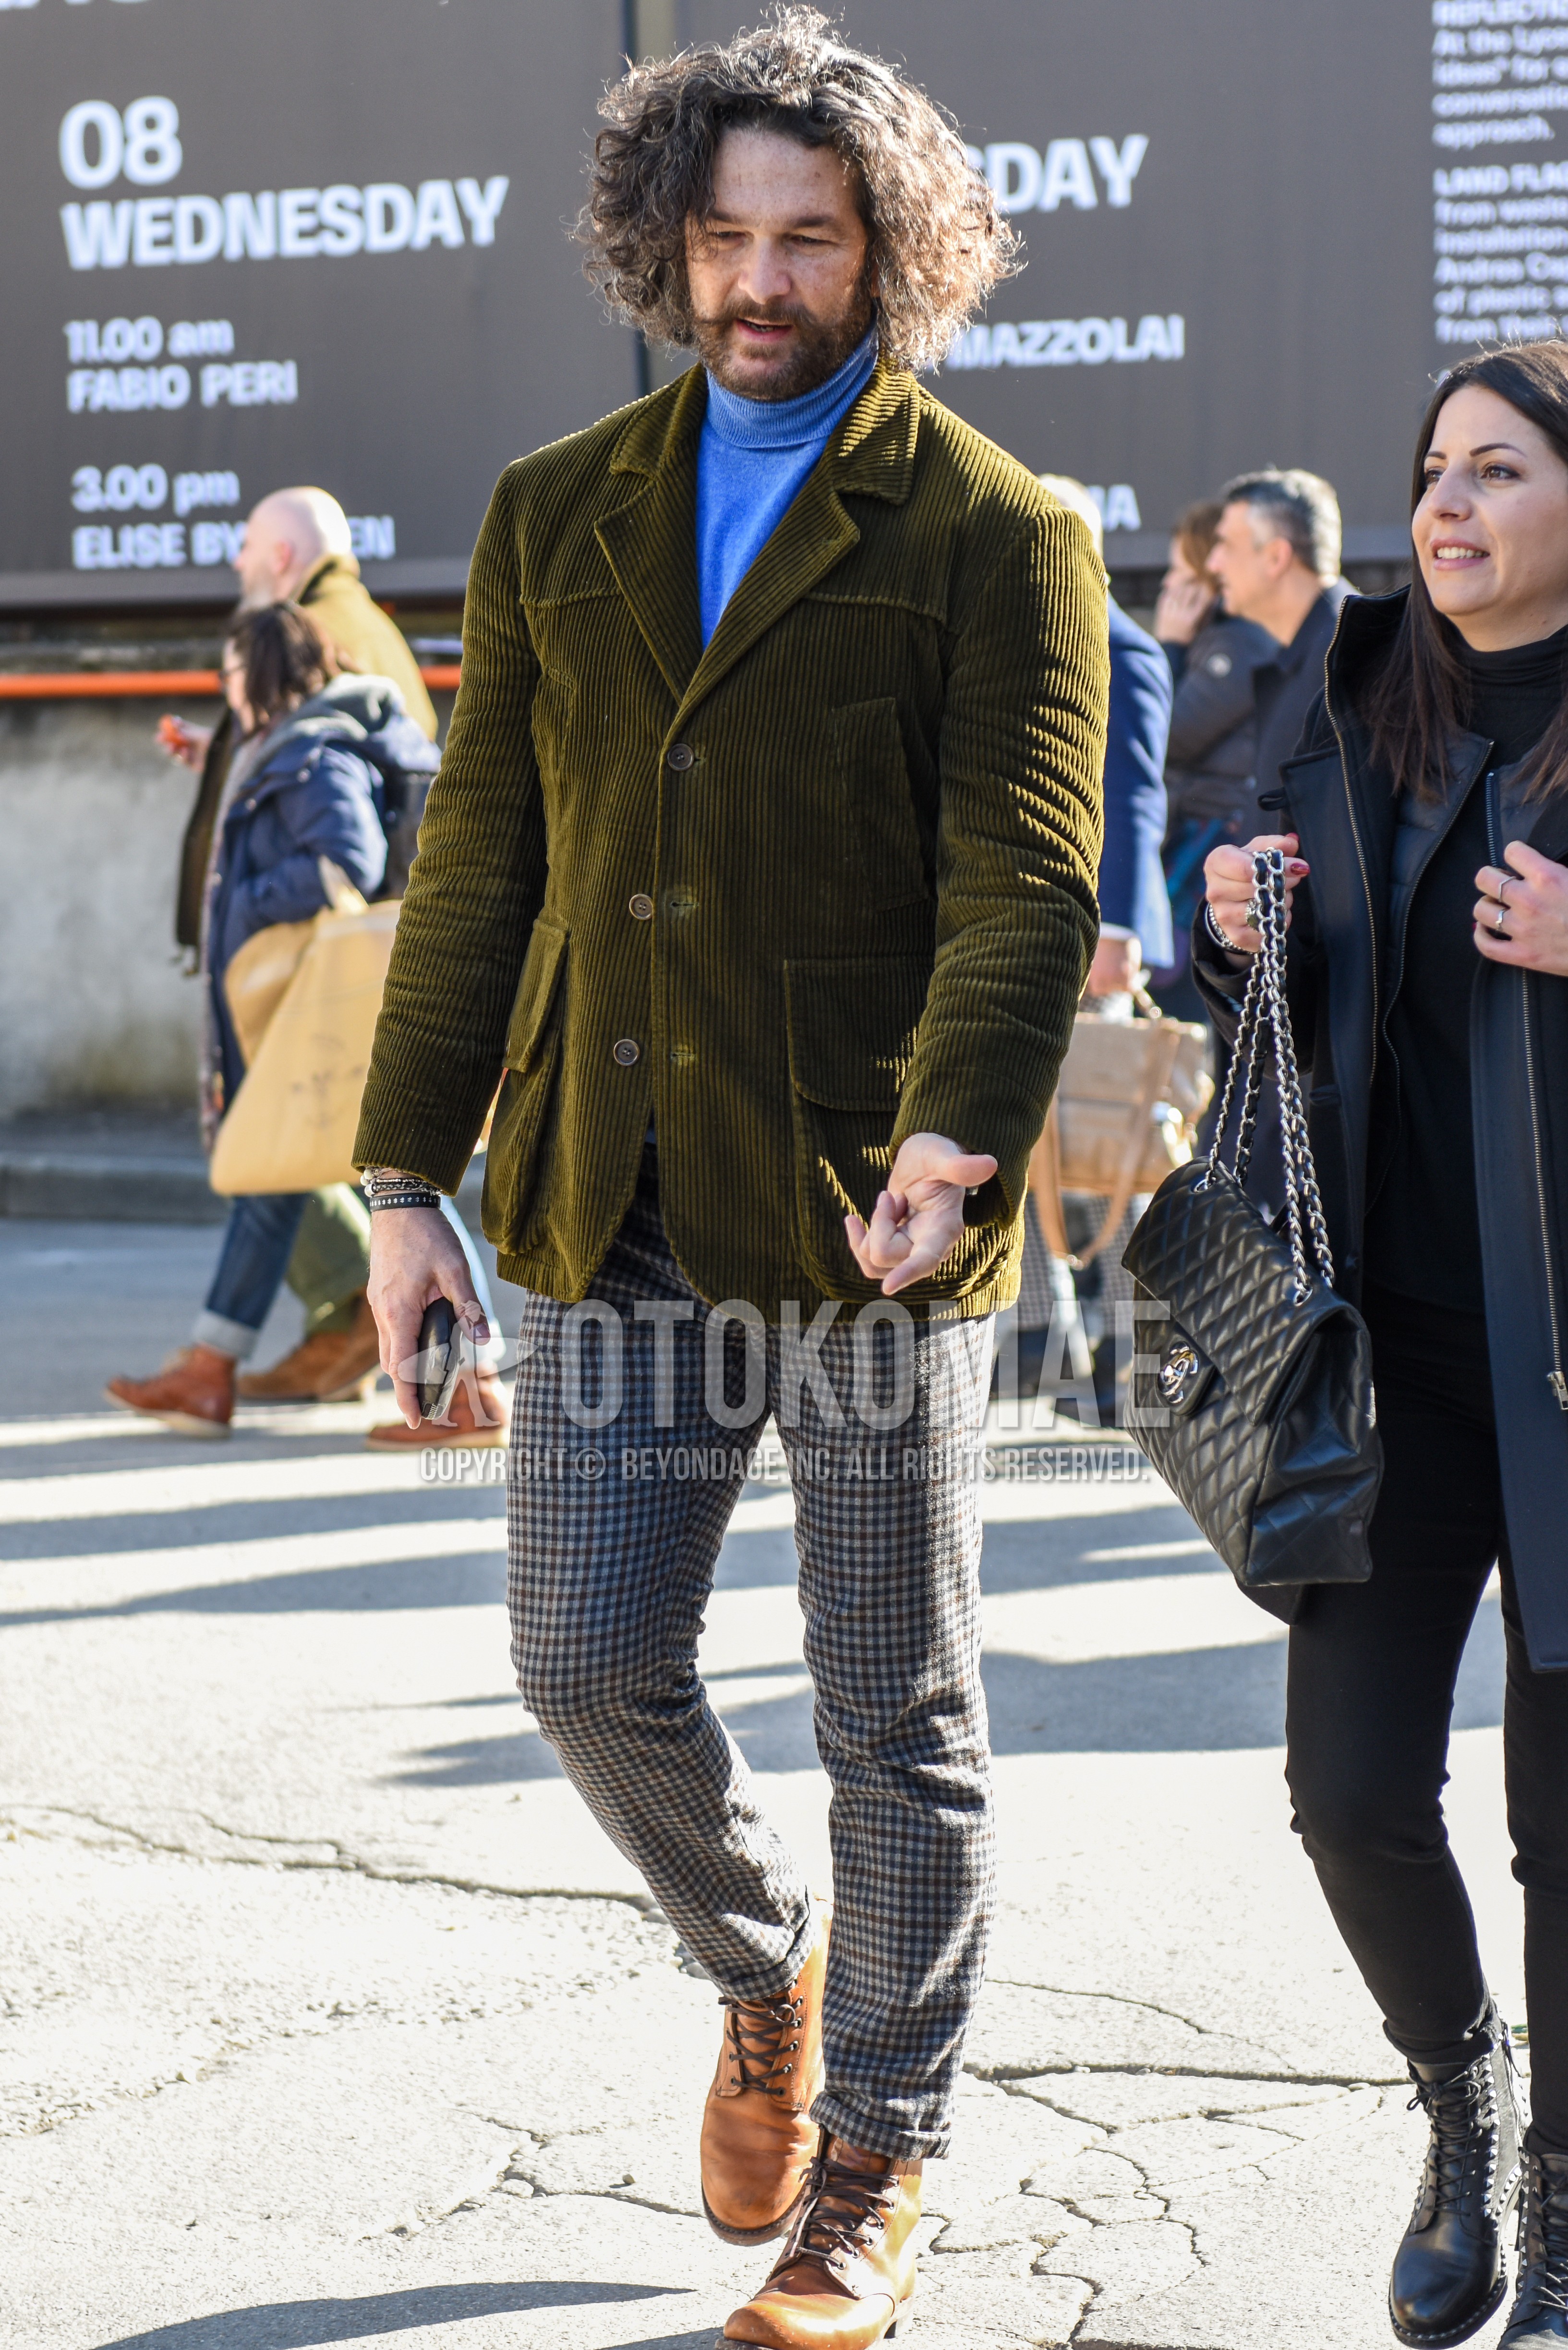 Men's autumn winter outfit with olive green plain tailored jacket, blue light blue plain turtleneck knit, gray check slacks, brown work boots.